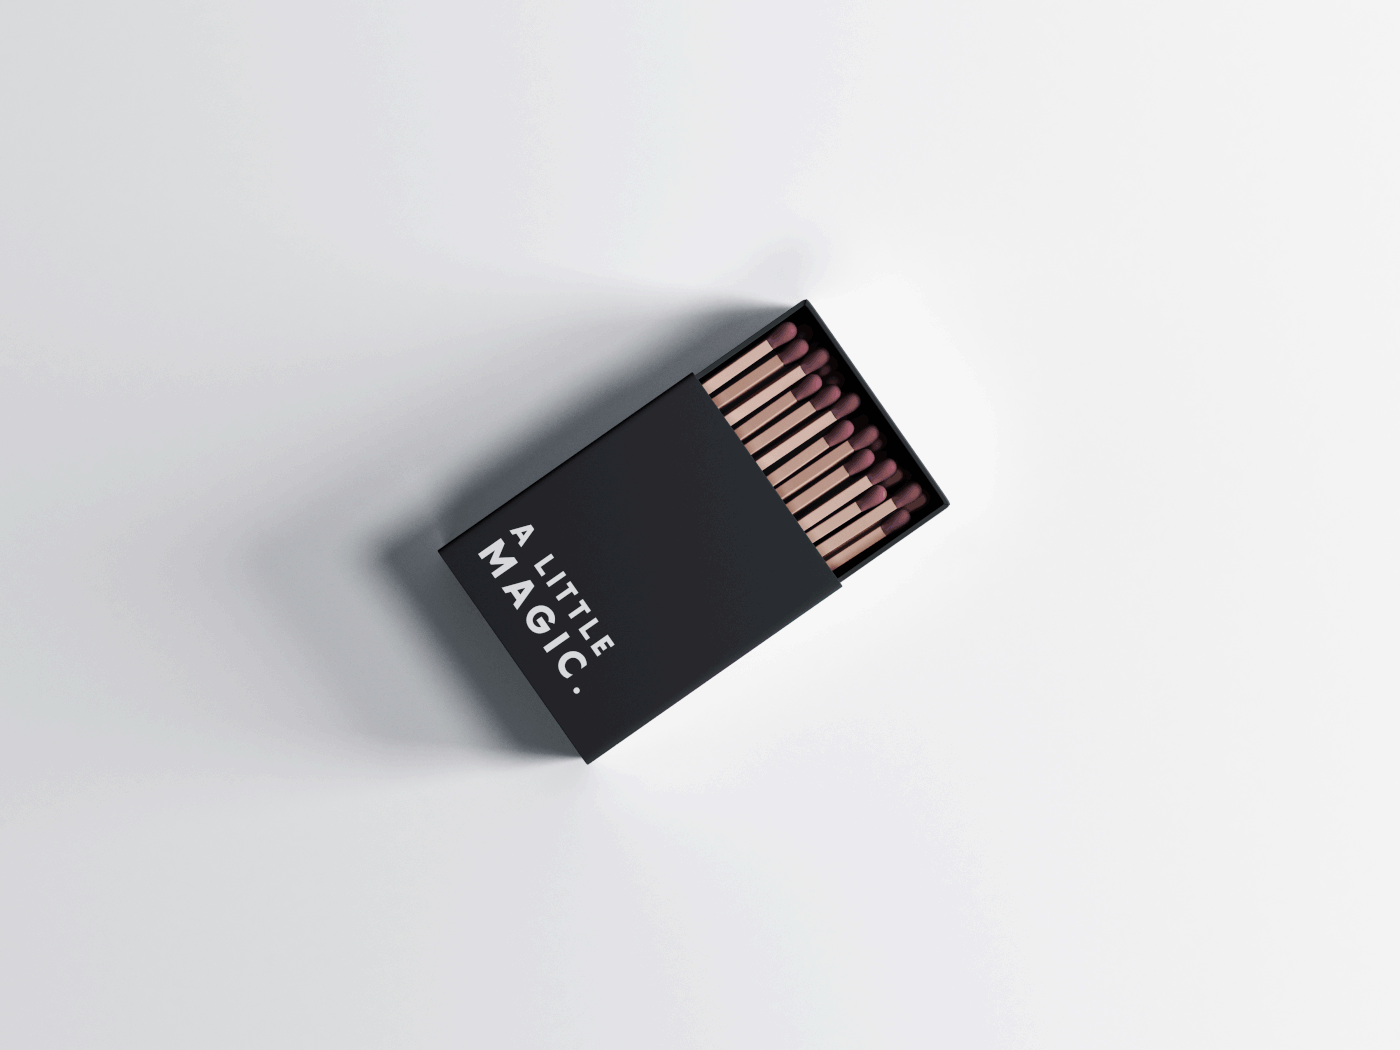 black and white flyer Packaging redesign scent gestalt Incense Magic   pattern re-design